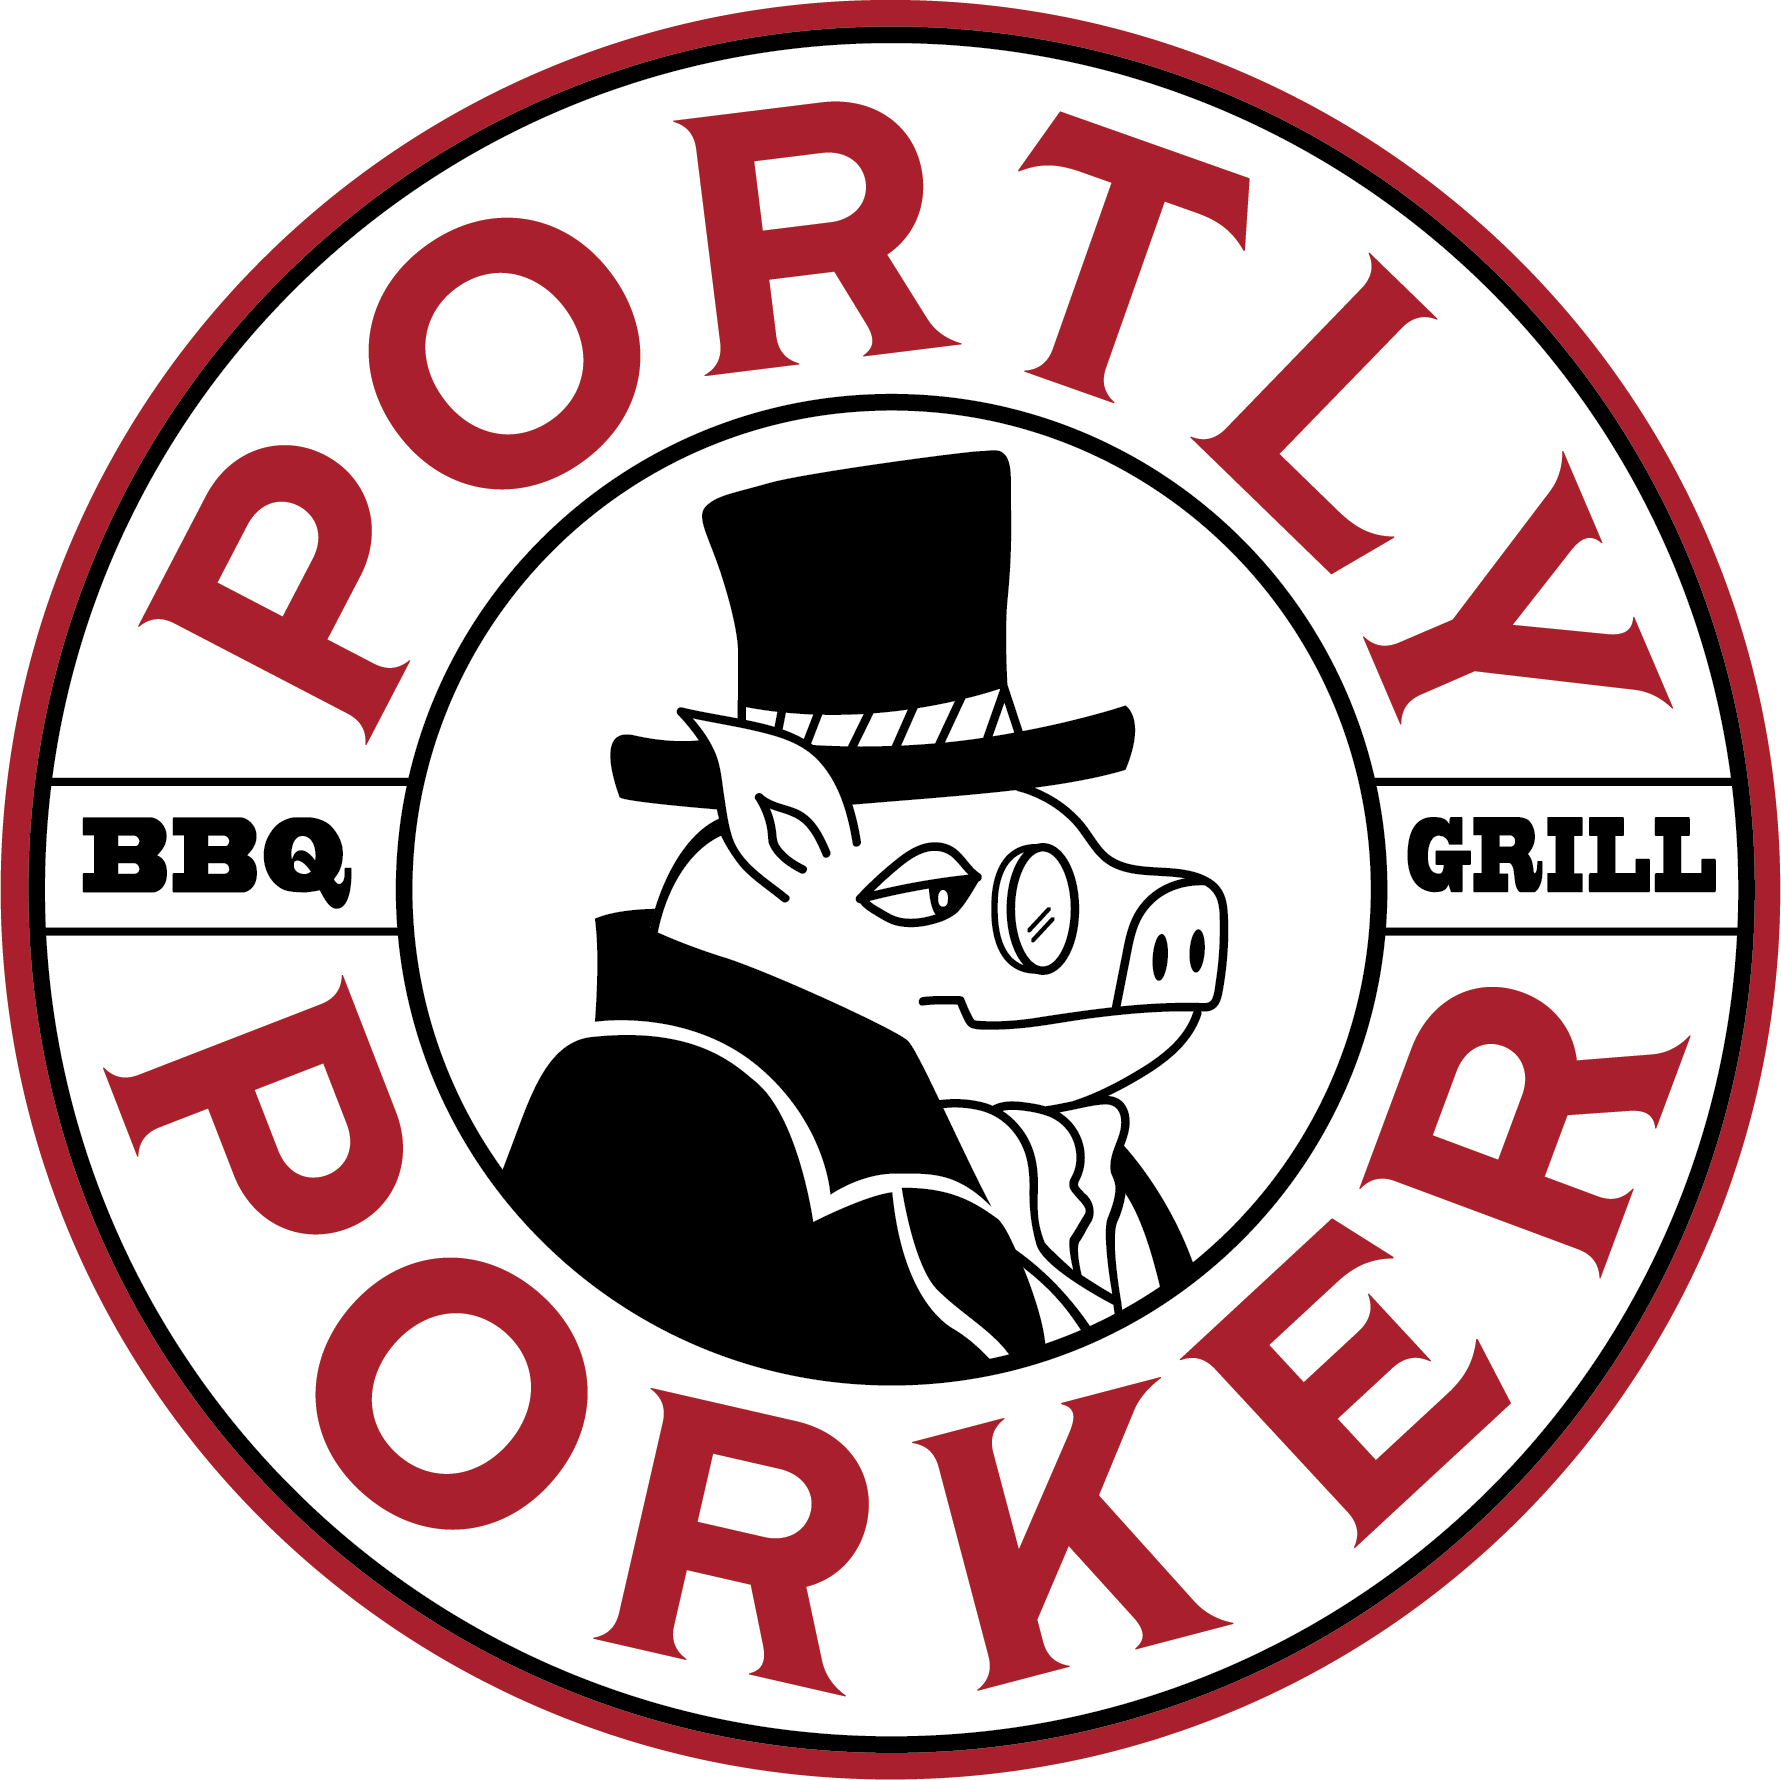 Portly Porker BBQ Grill